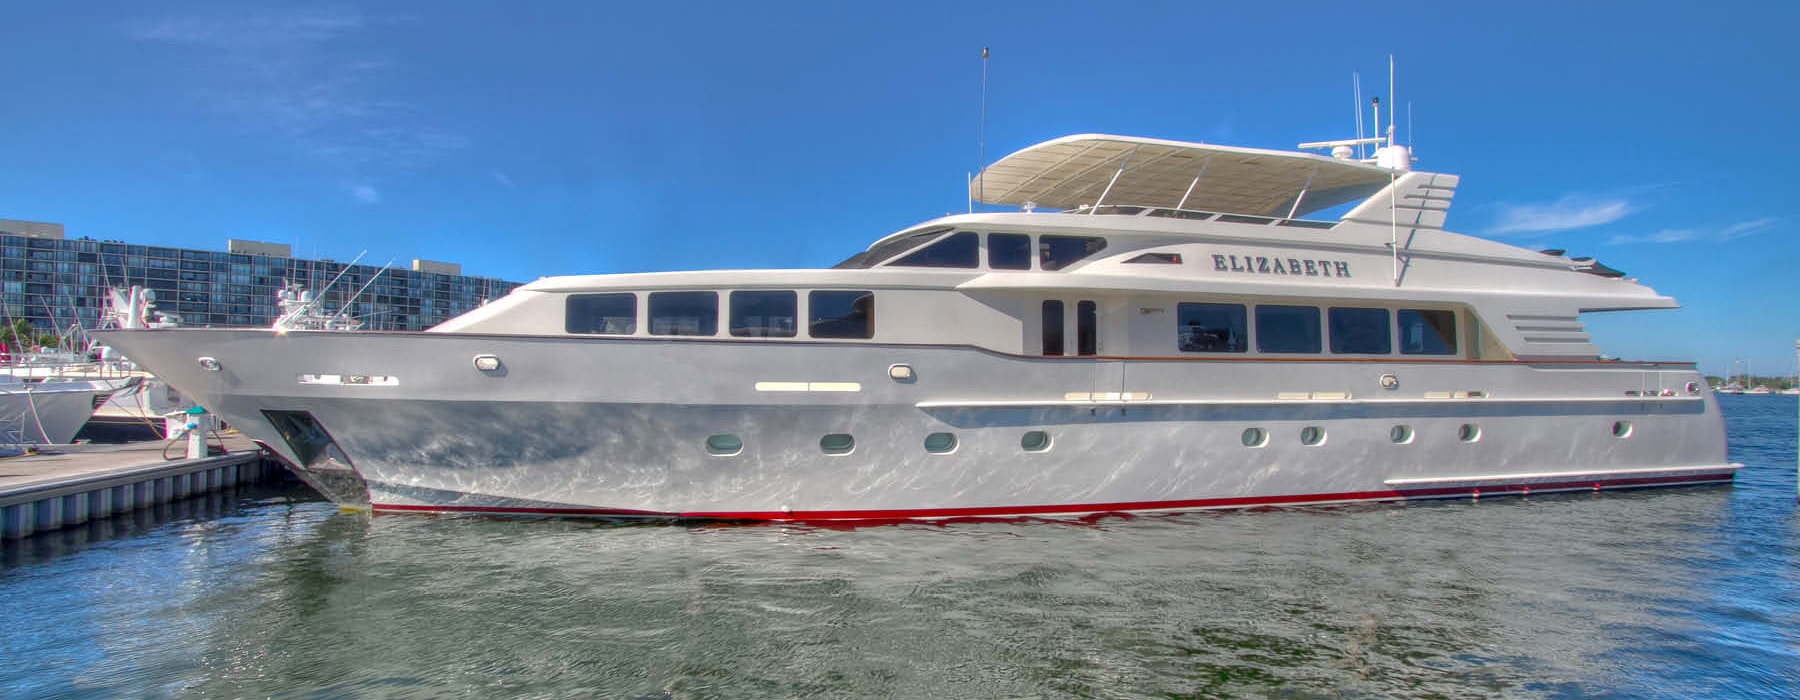 Trinity ELIZABETH Luxury Yacht For Sale